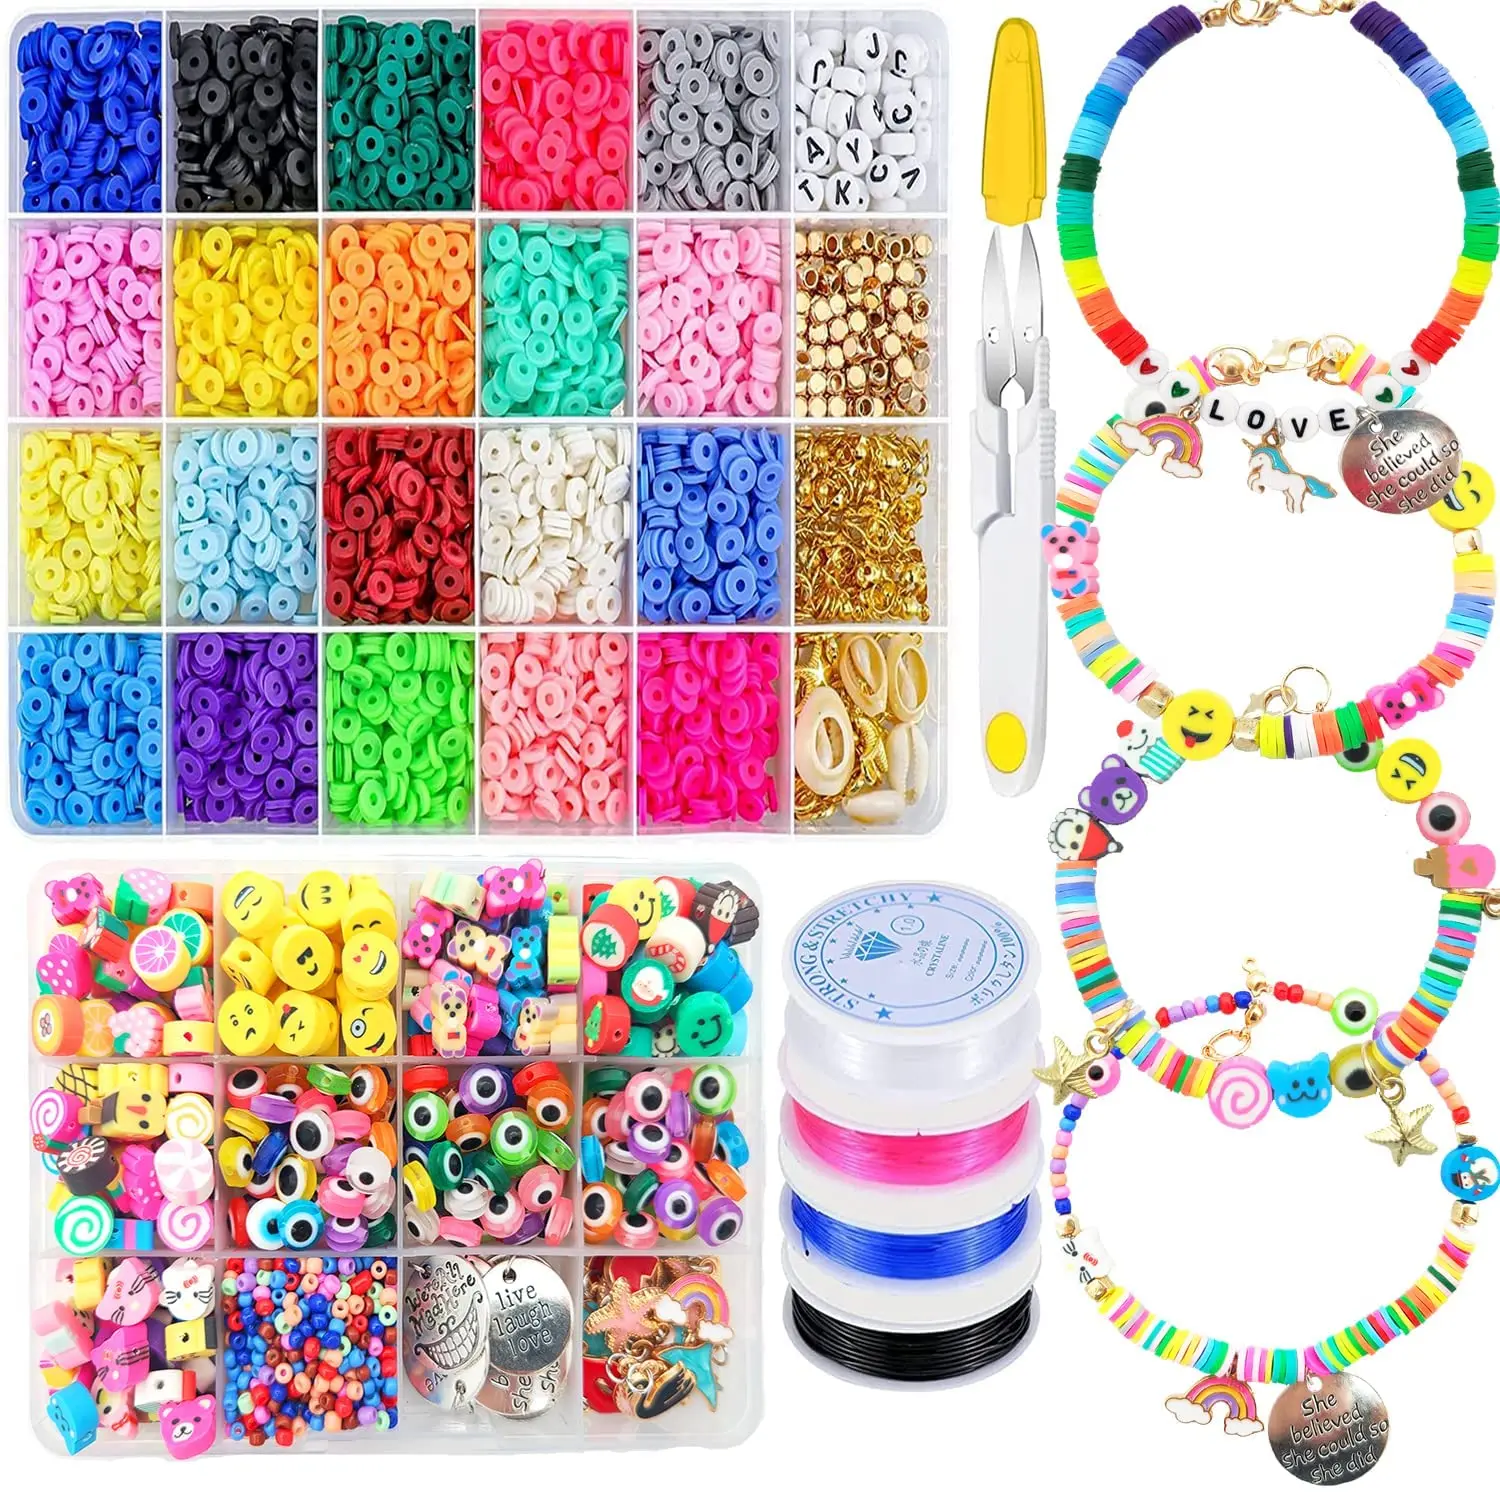 6000 clay beads bracelet making kit